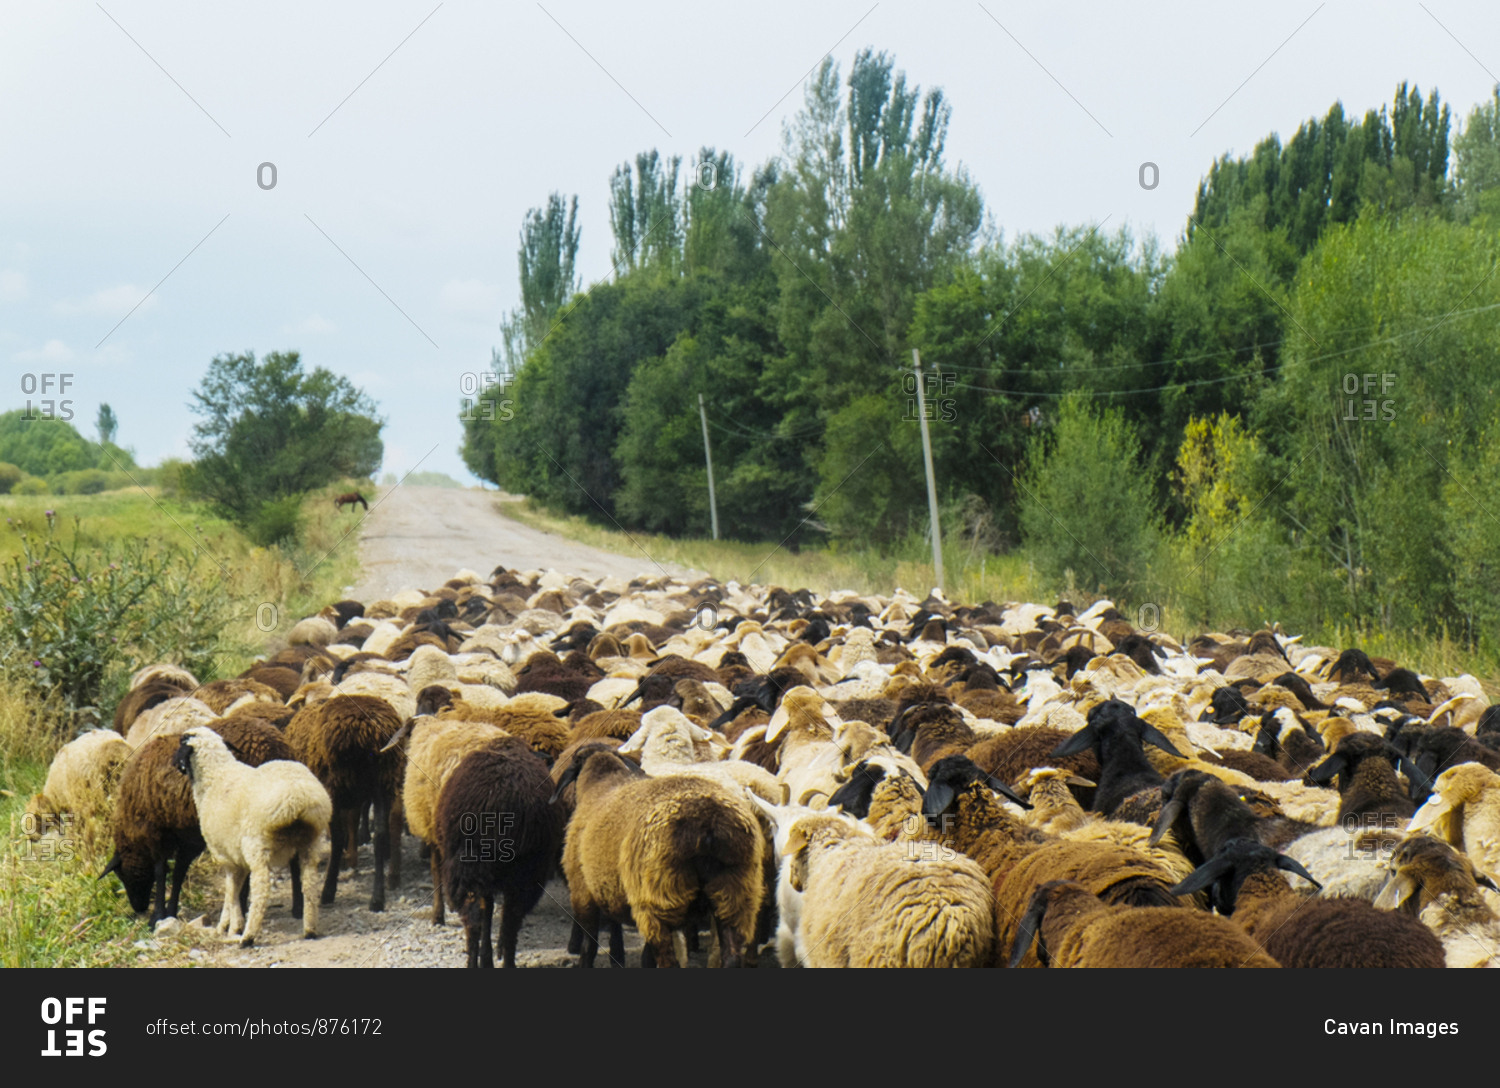 Sheep walking on road against sky